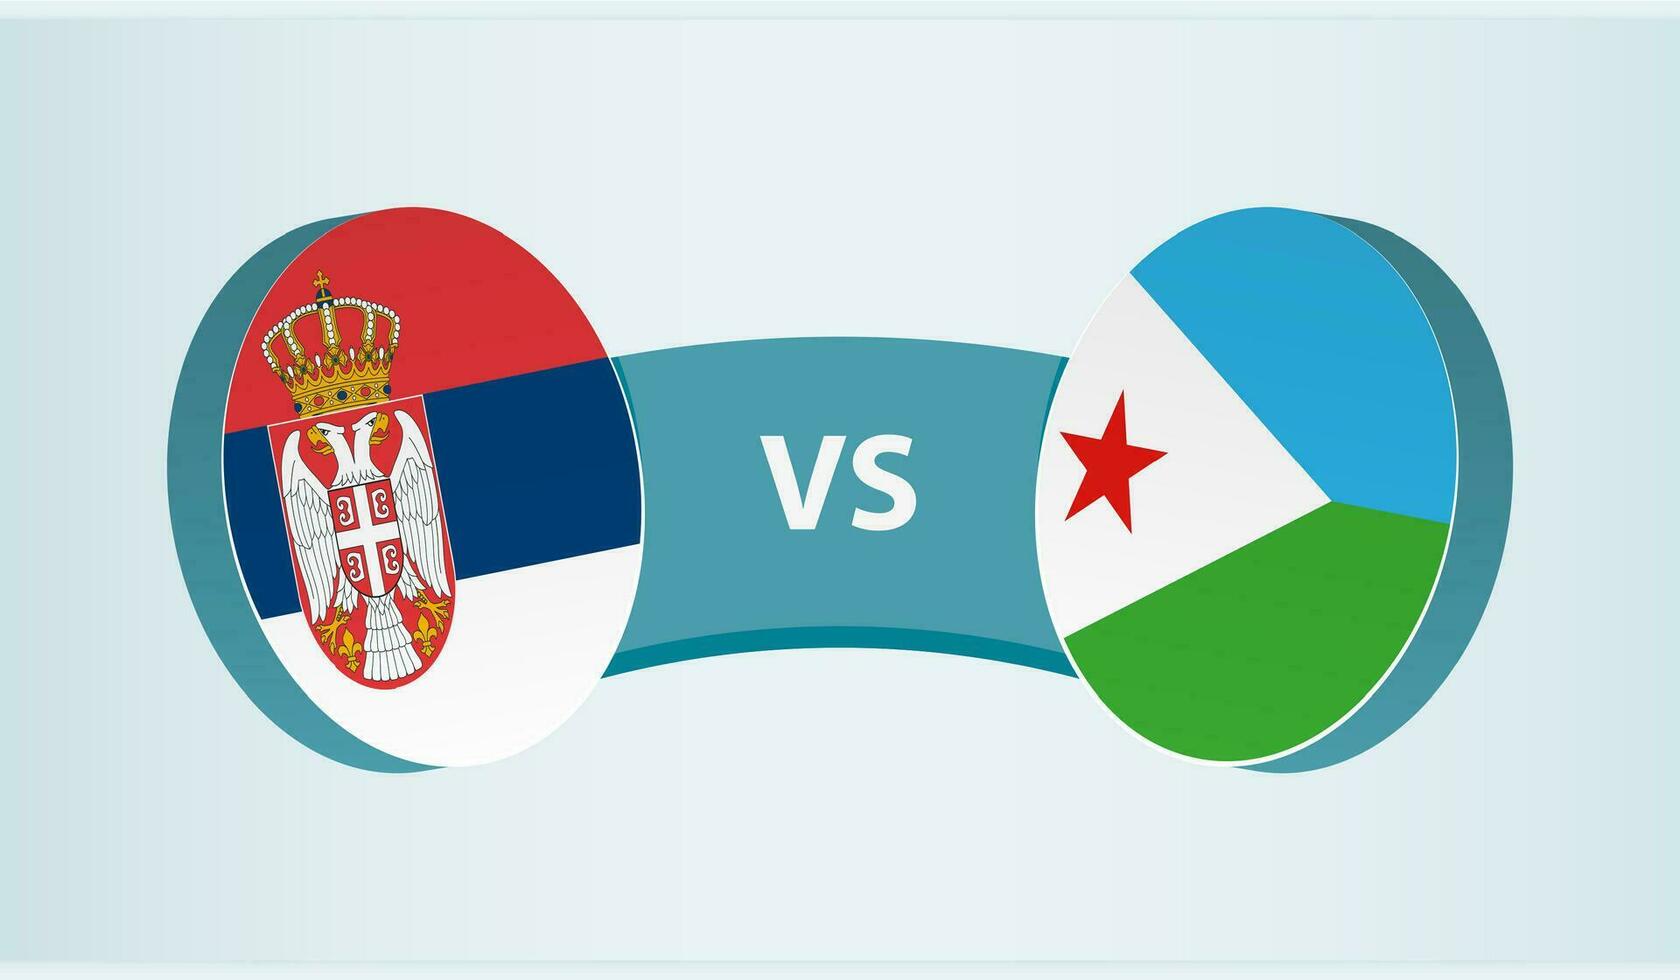 Serbia versus Djibouti, team sports competition concept. vector